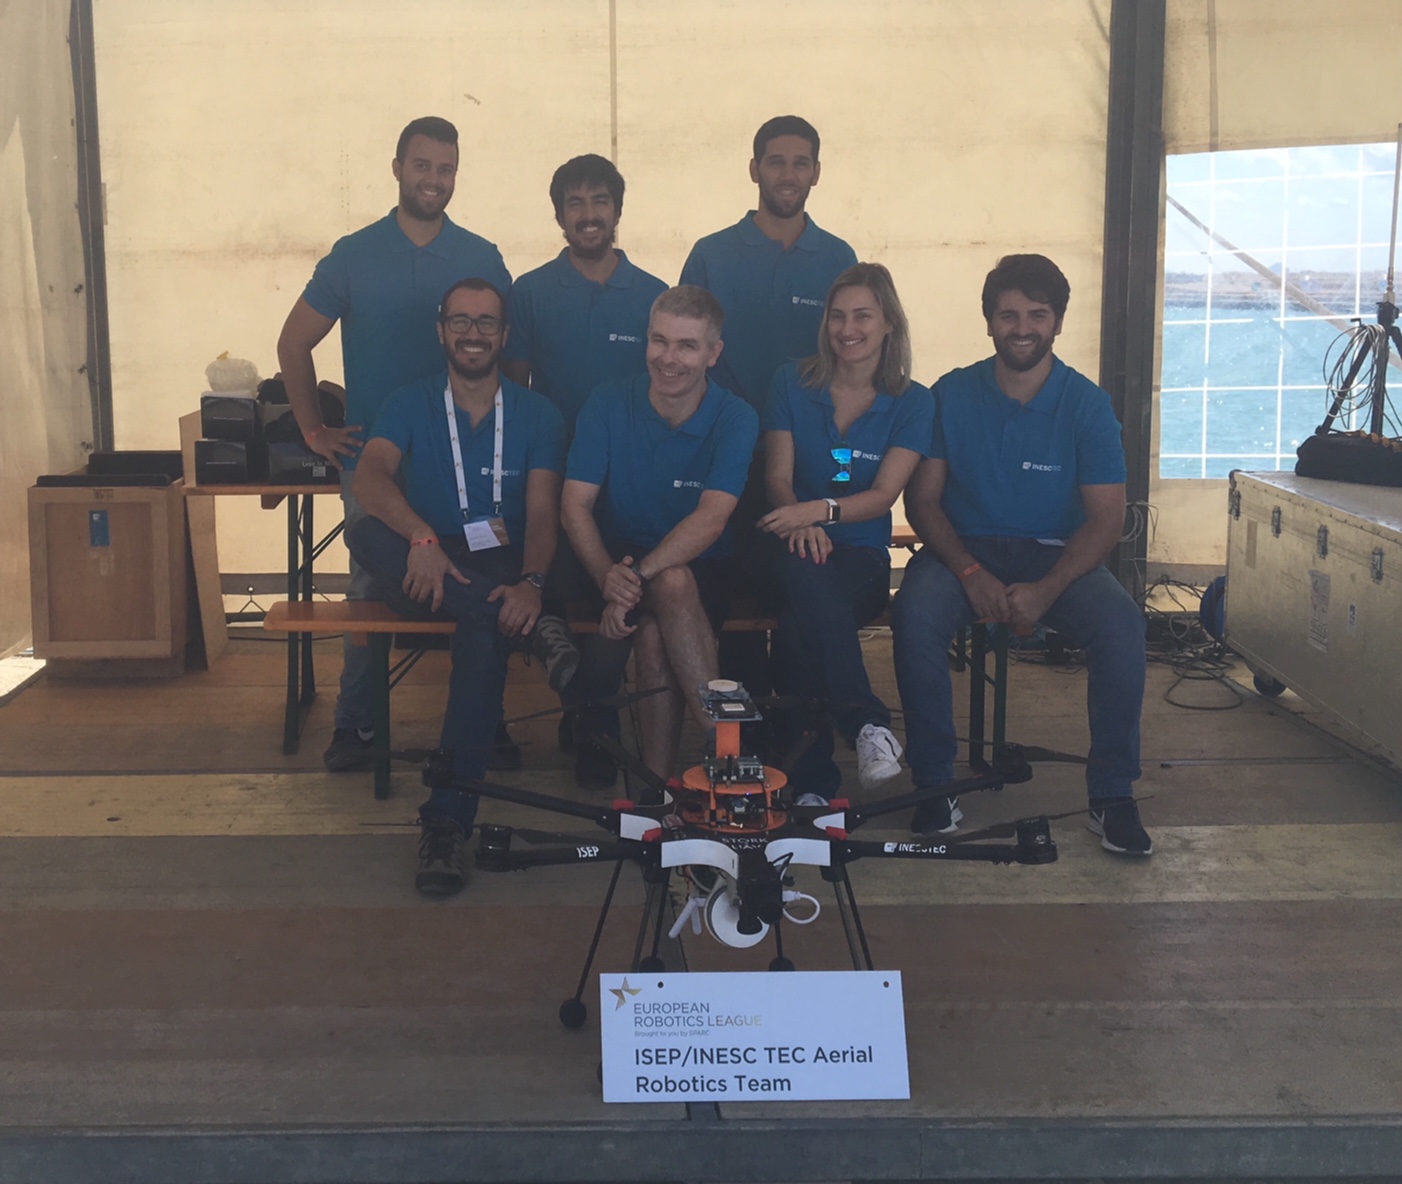 Equipa de robótica do INESC TEC bicampeões na European Robotics League